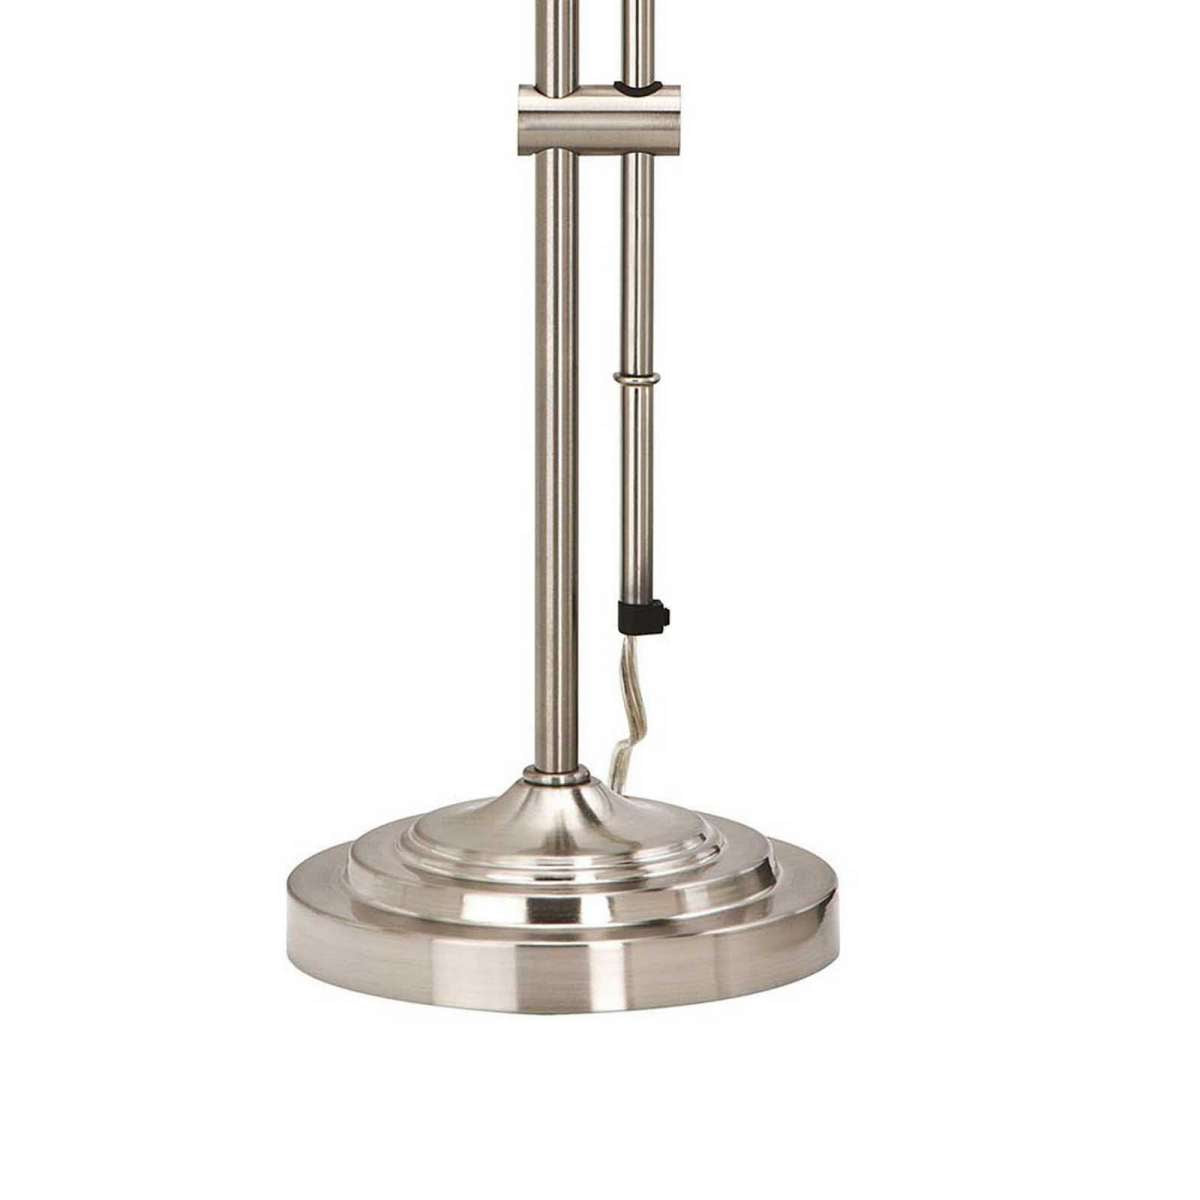 Metal Rectangular Desk Lamp With Adjustable Pole, Silver By Benzara